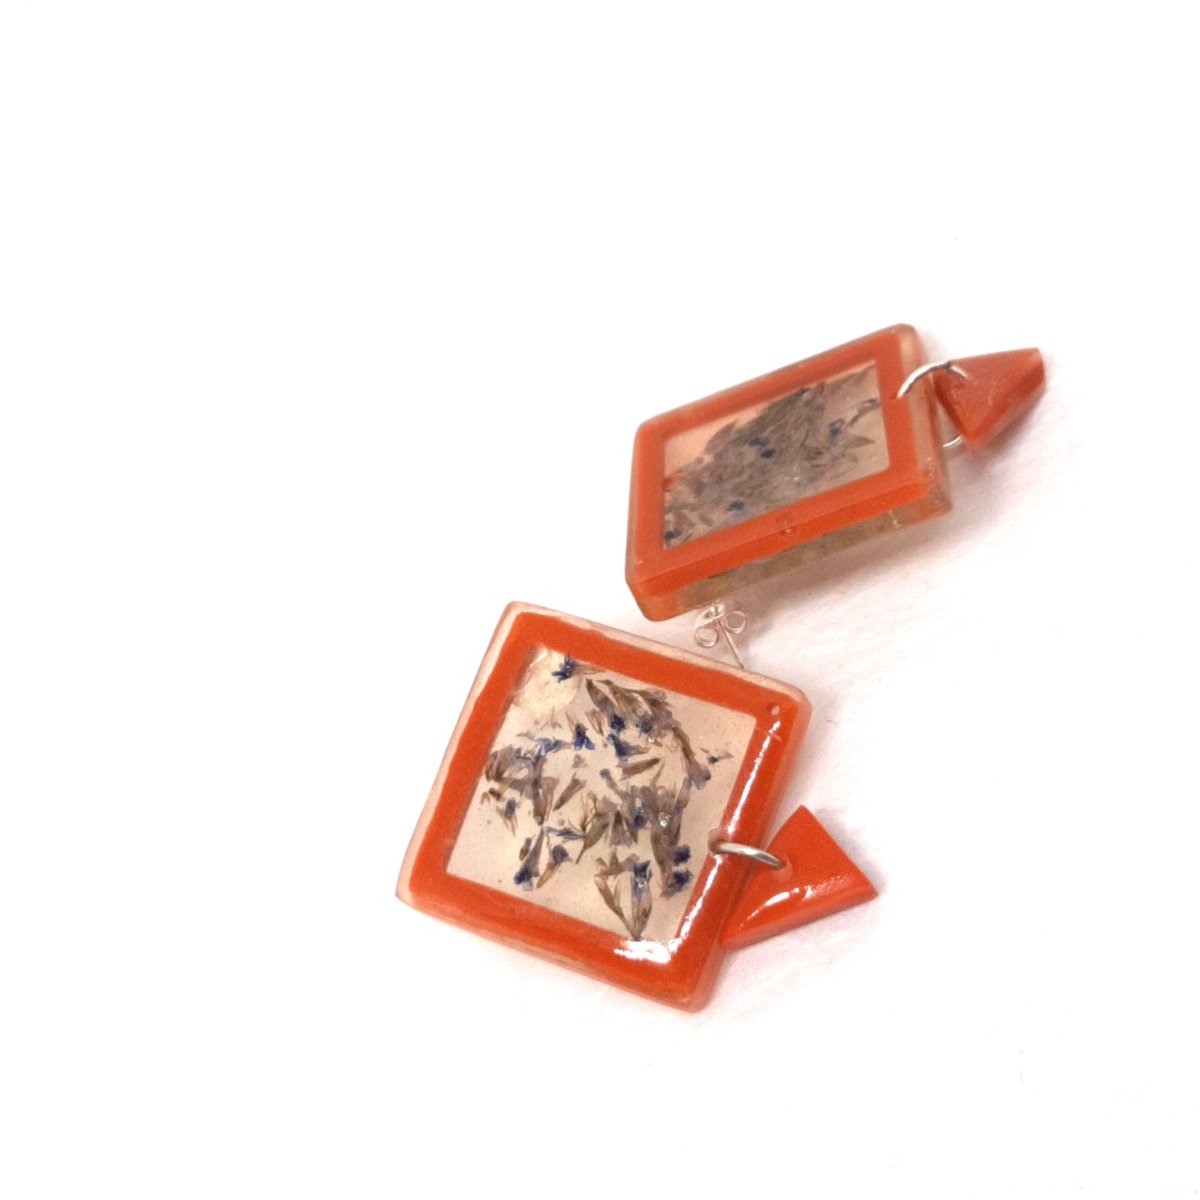 Statement Resin Earrings Stud, Lavender Flower Dried Inside and Orange Geometric Shapes
etsy.me/3h47kZc
via@Etsy

#handmade #jewelry #orange #bioearrings #resinearrings #piartesanales #geometricearrings #contemporaryjewelry @EtsySocial